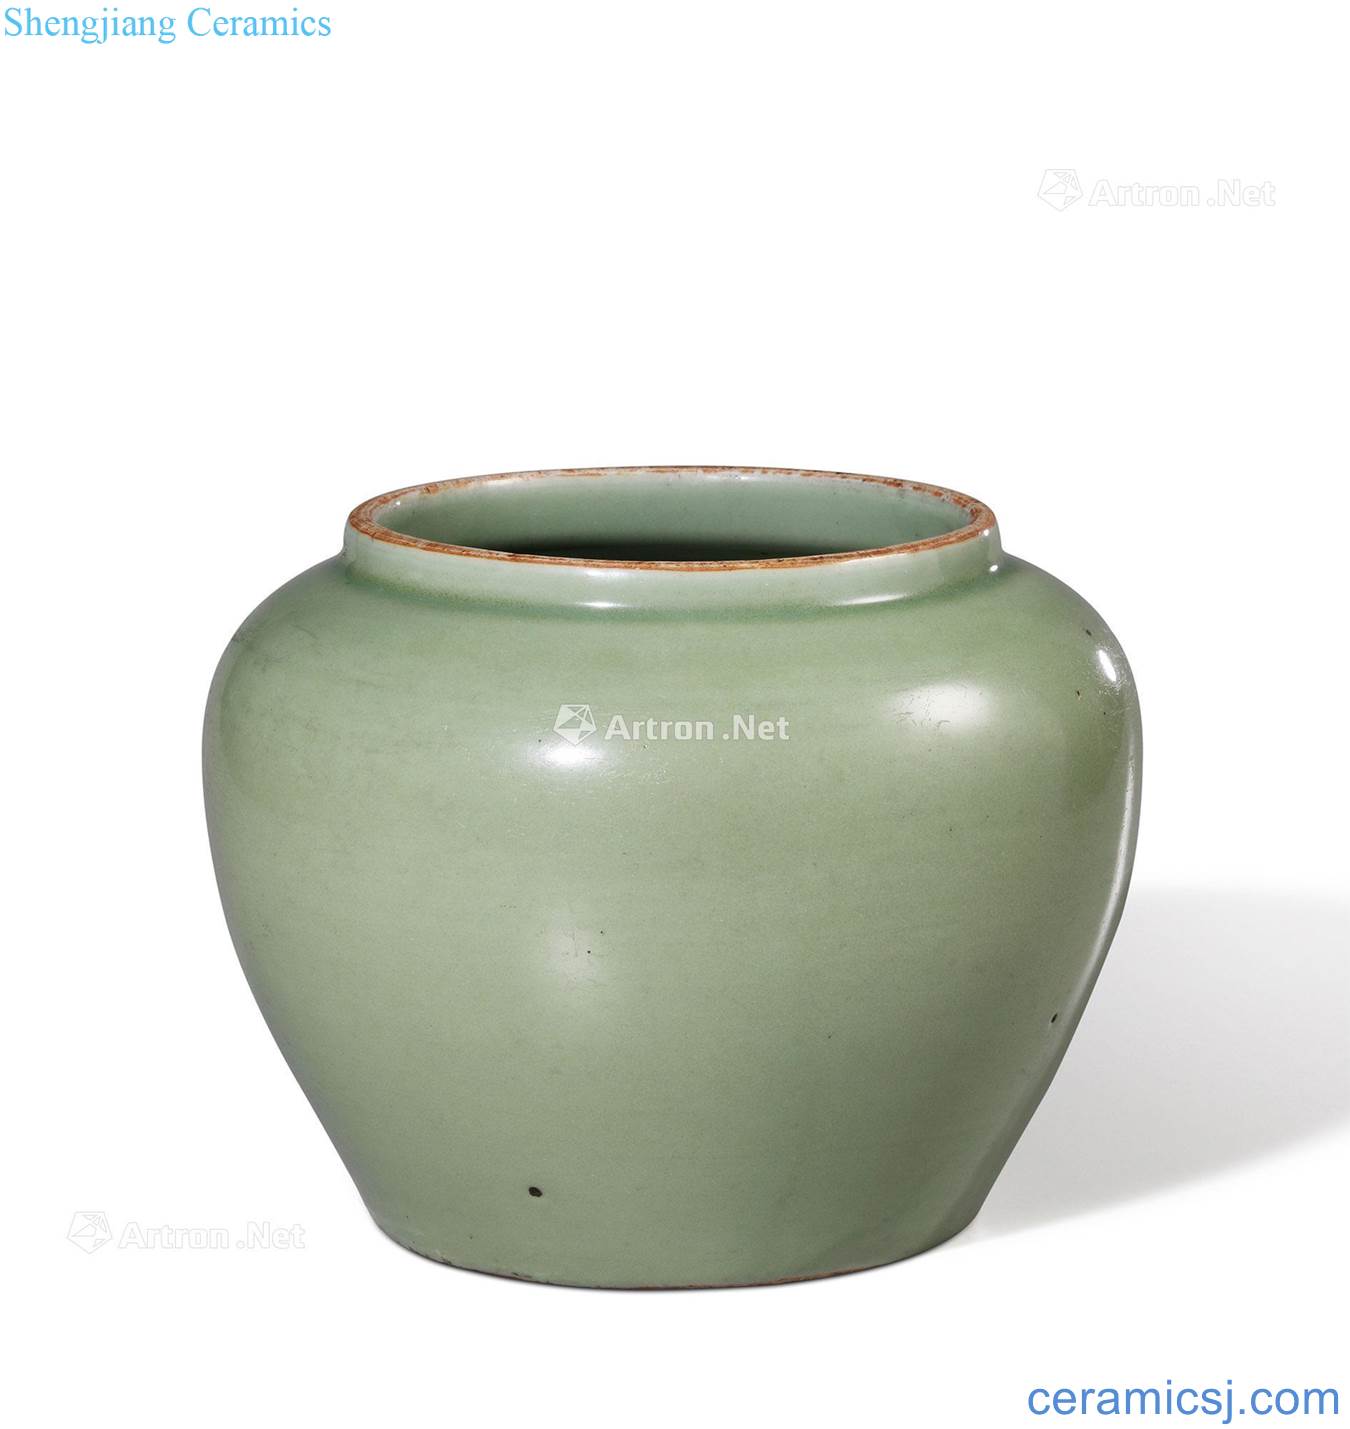 Early Ming dynasty Longquan celadon glaze tanks